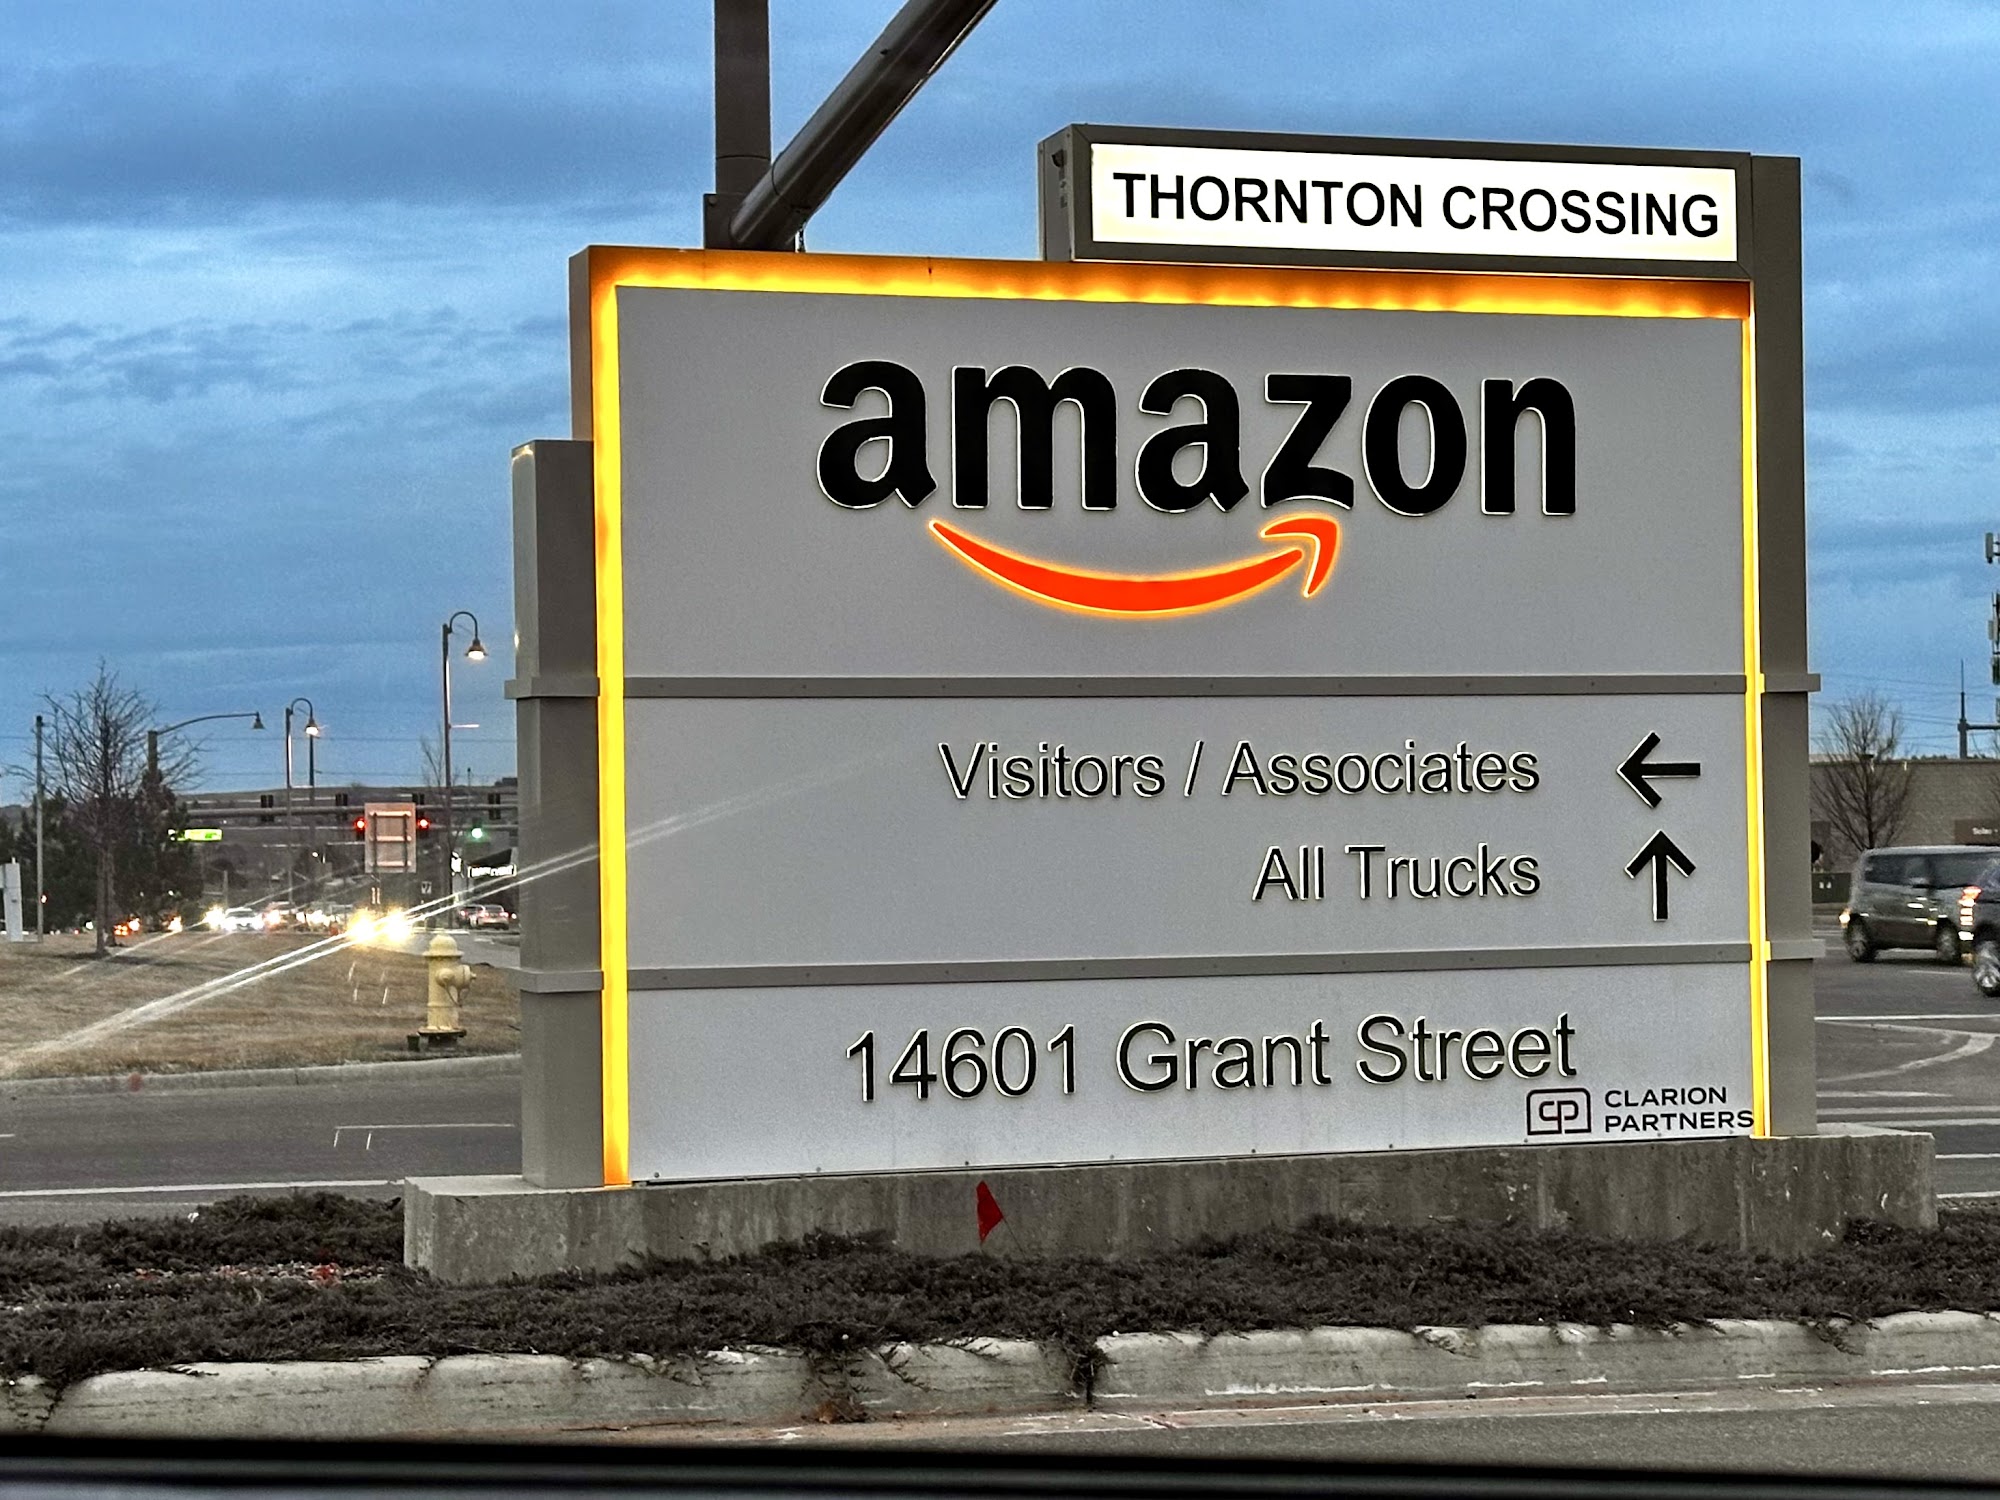 Amazon - DEN3 THORNTON CO